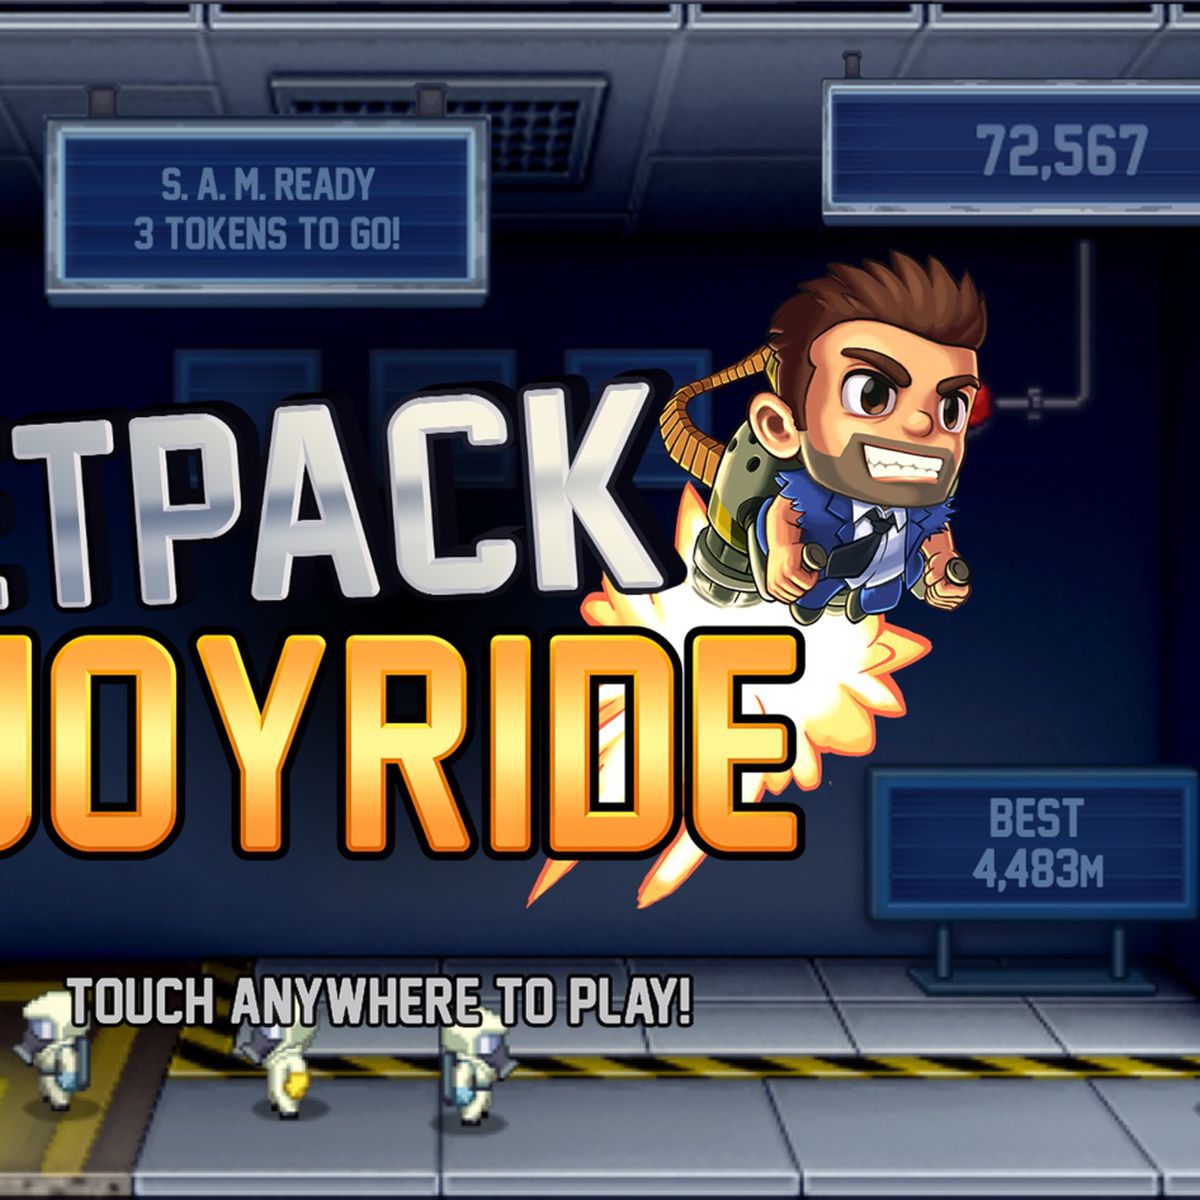 Jetpack Joyride 2 debuts on Apple Arcade